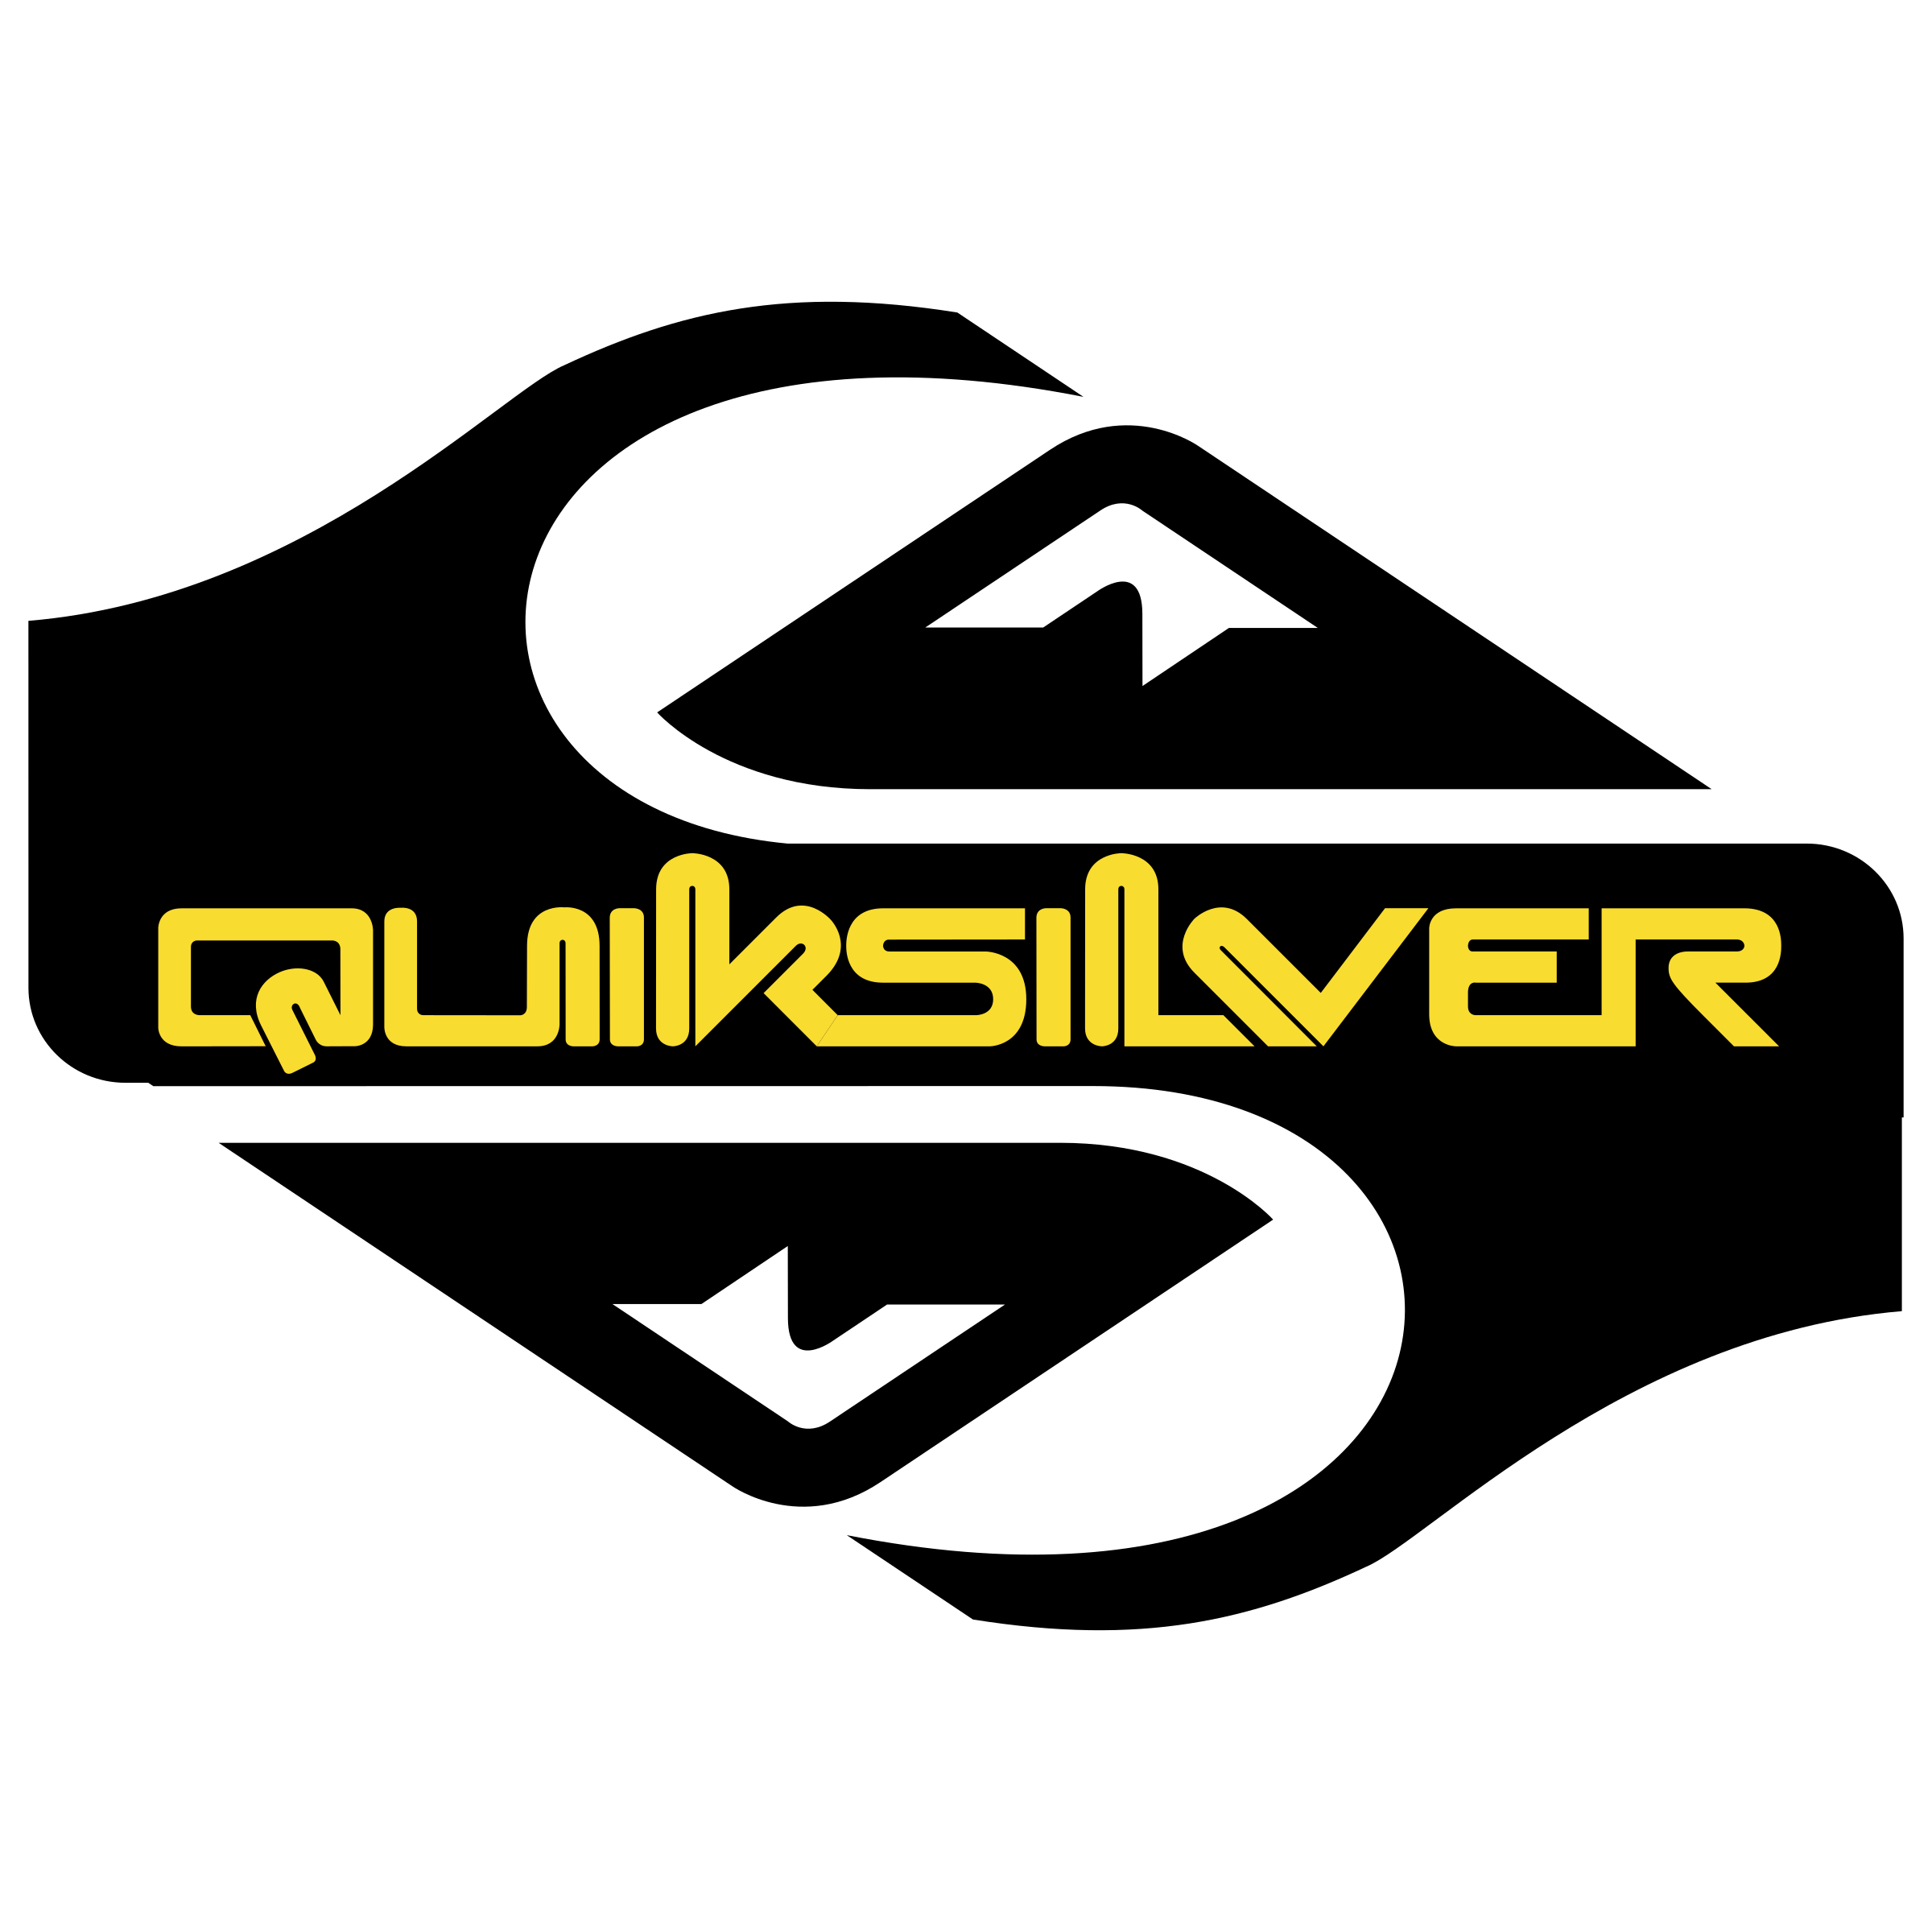 The Quiksilver Logo - Quiksilver Logo PNG Transparent & SVG Vector